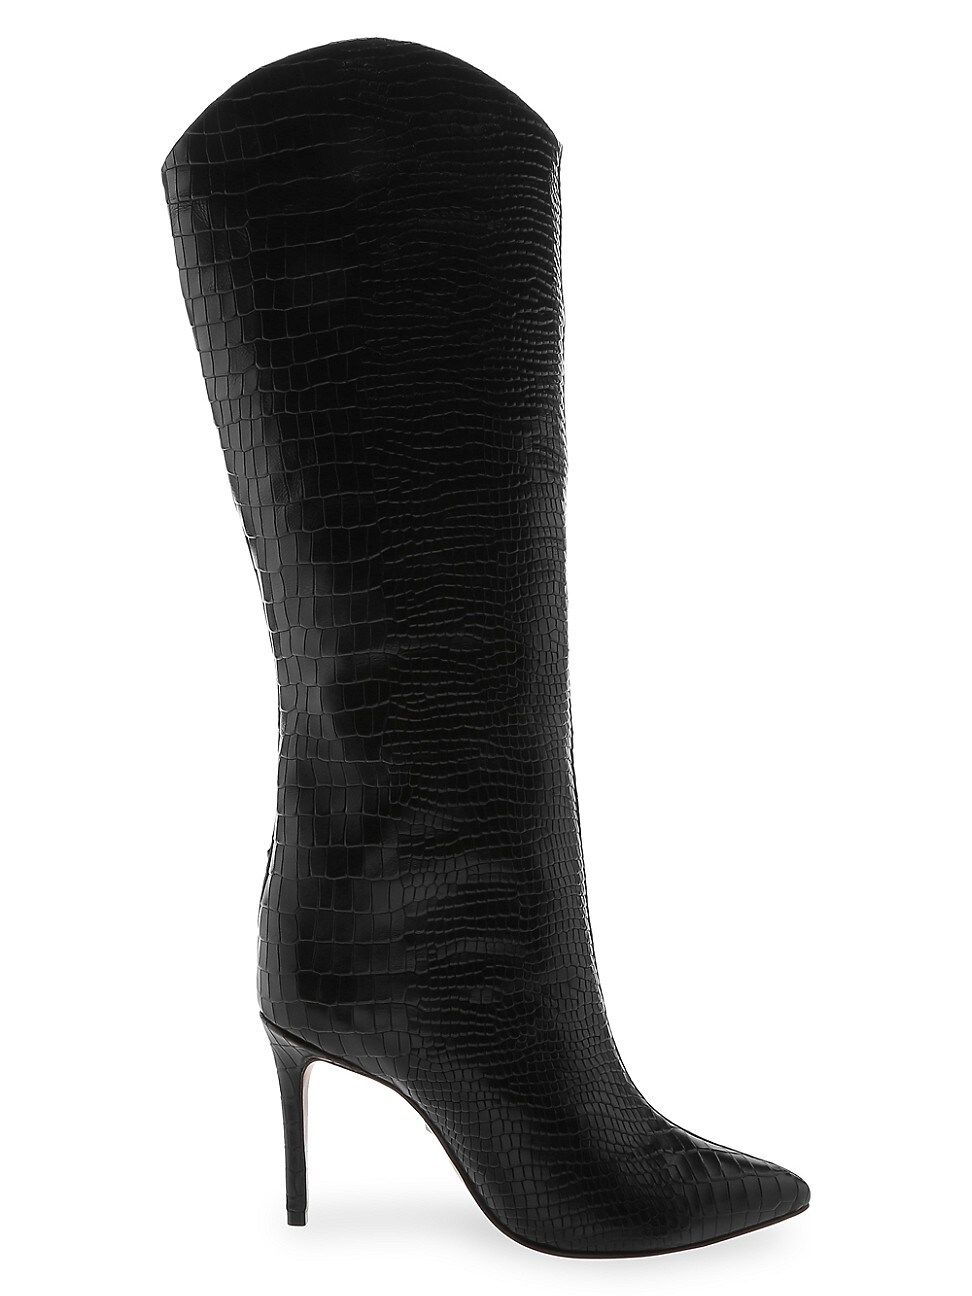 Schutz Maryana Knee-High Croc-Embossed Leather Boots | Saks Fifth Avenue